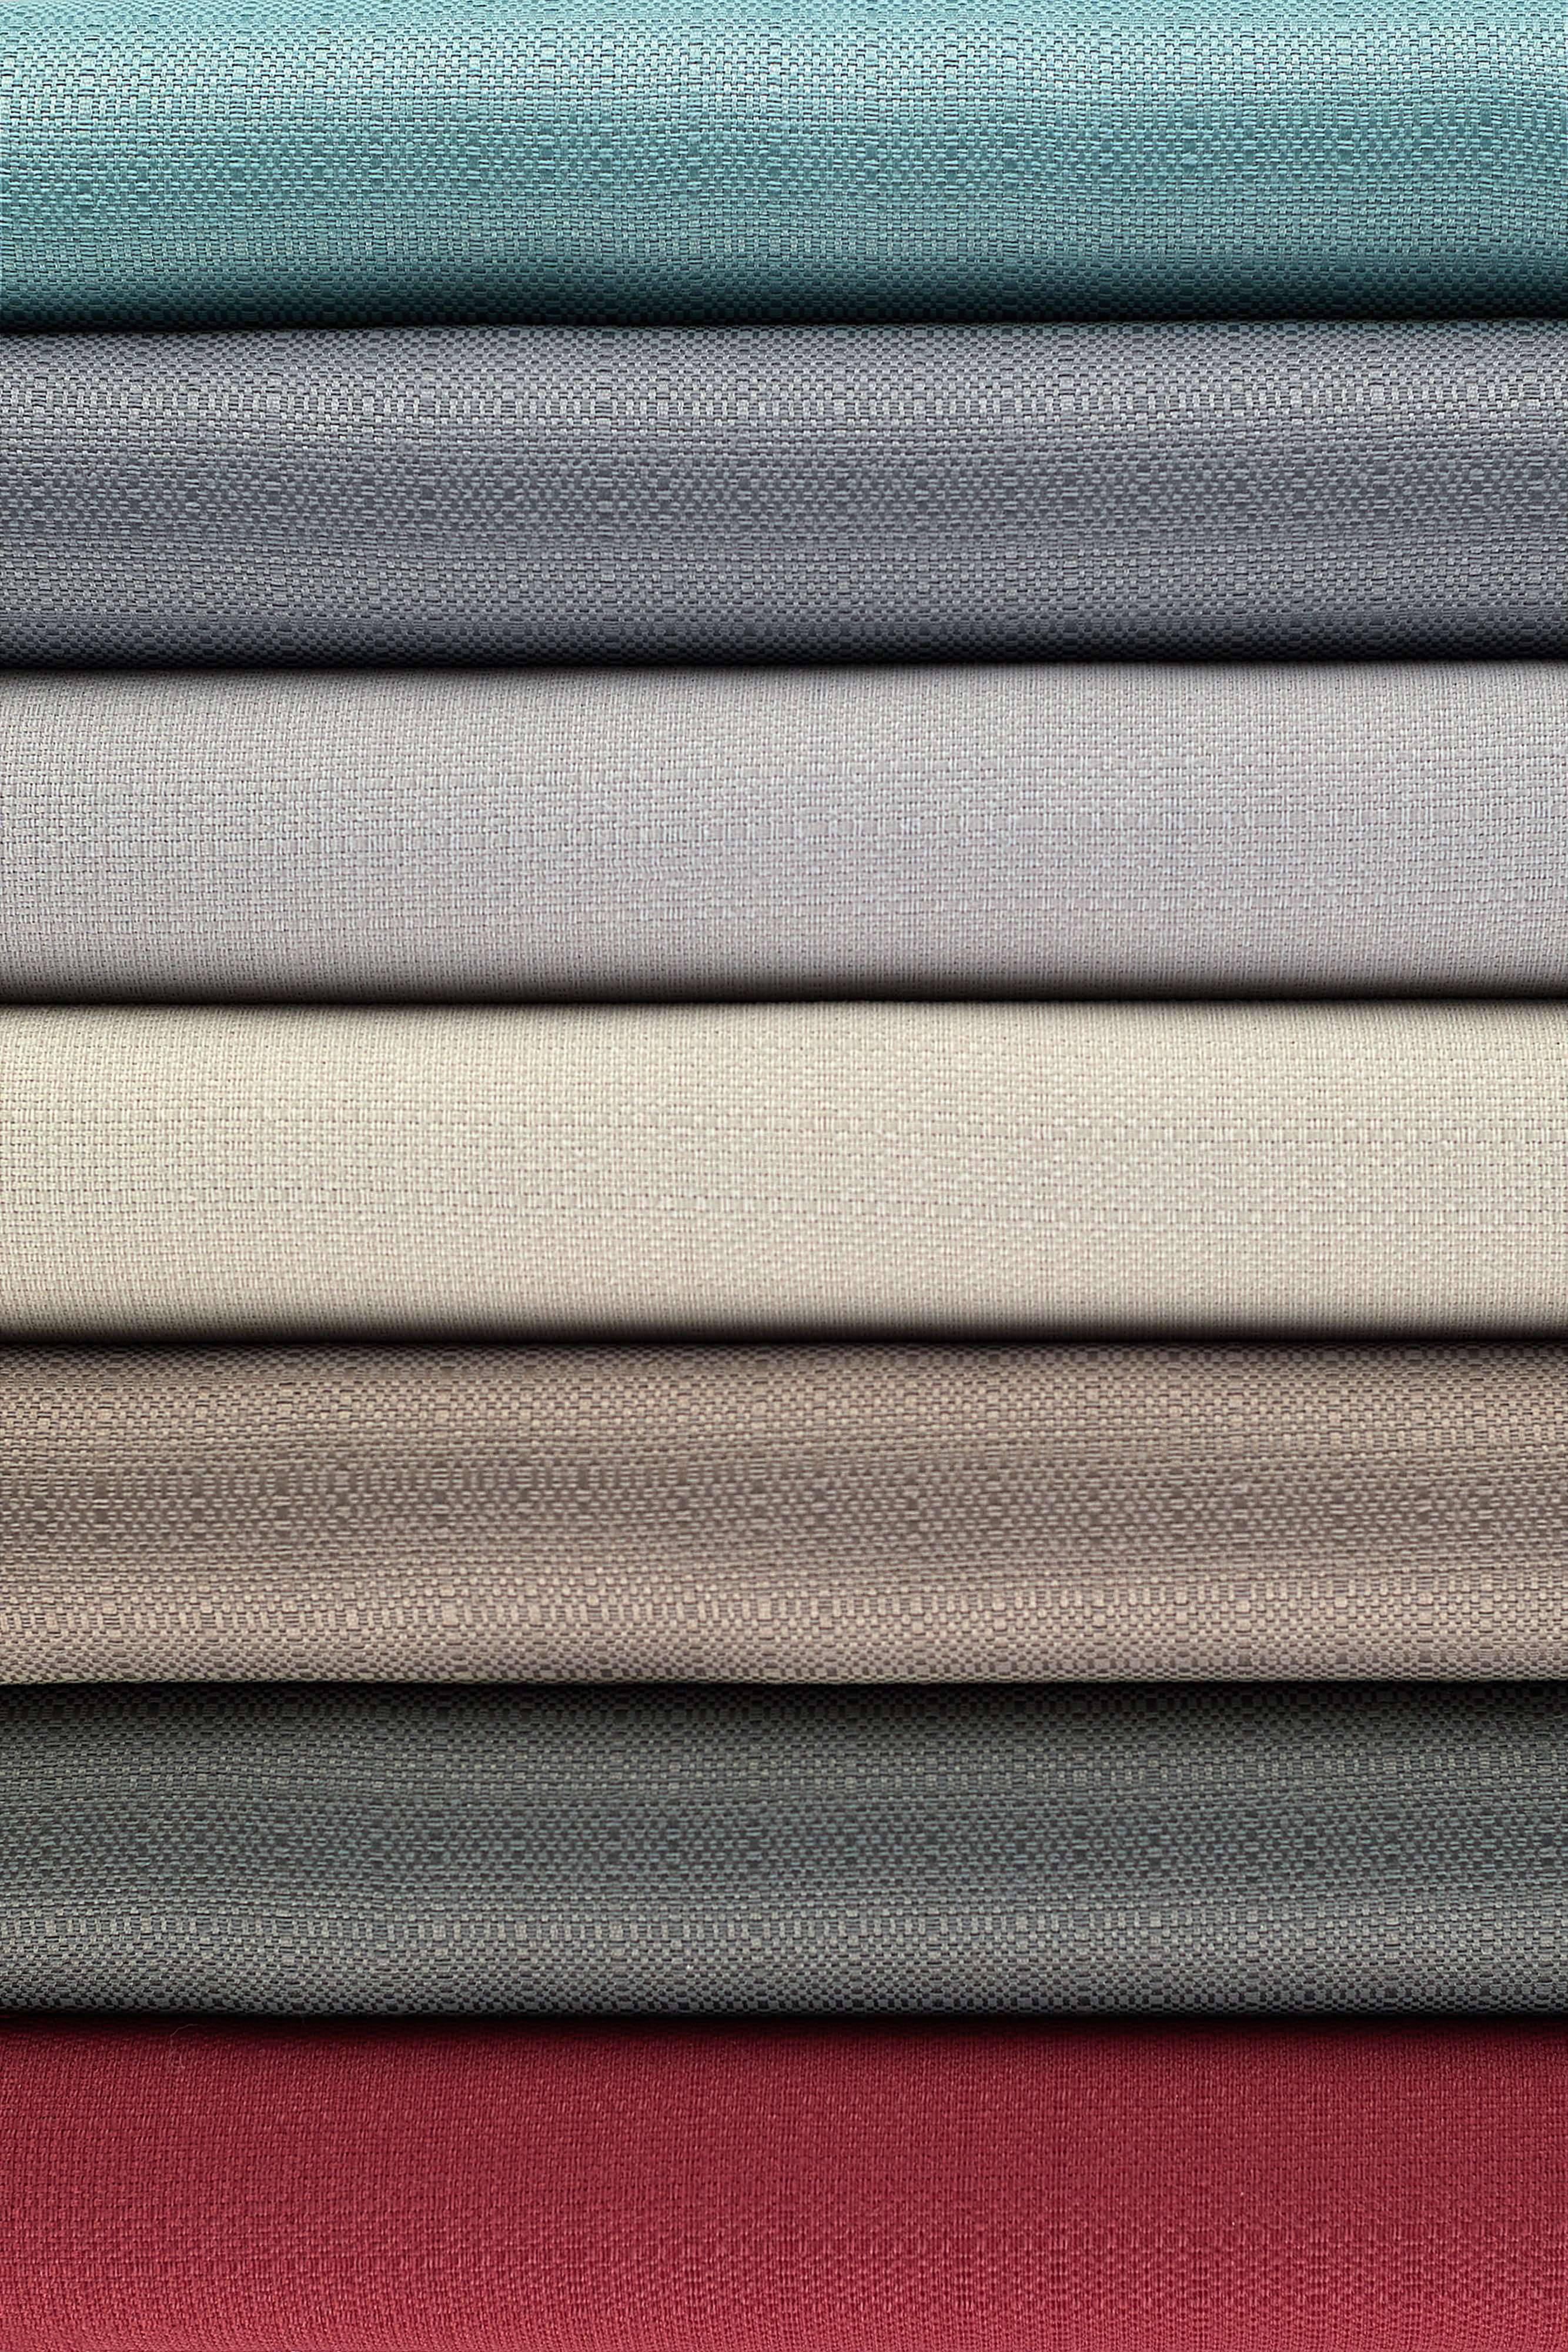 McAlister Textiles Nara Taupe FR Semi Plain Fabric Fabrics 